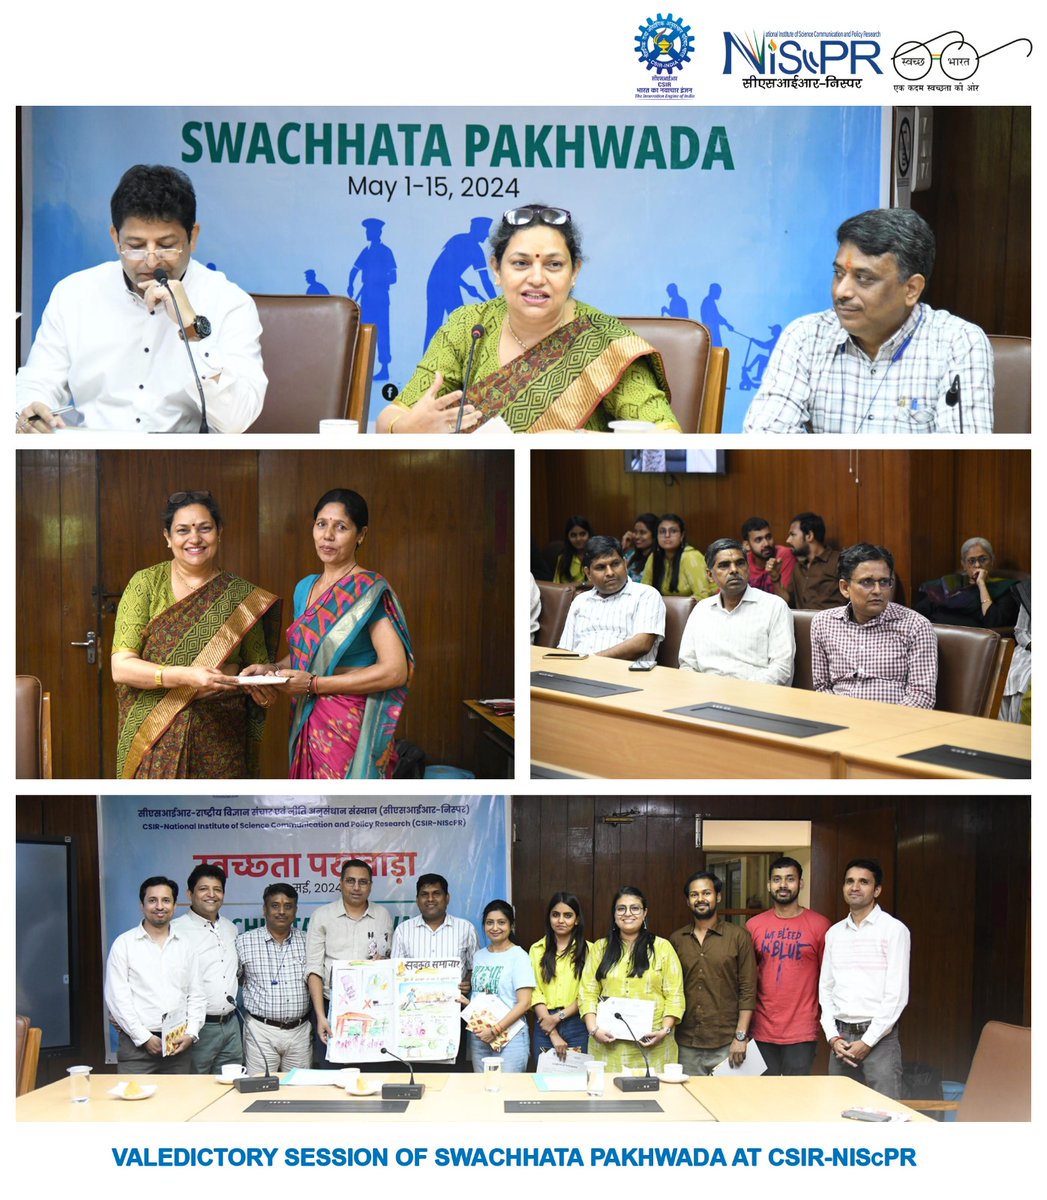 Glimpses of Valedictory session of #SwachhataPakhwada at CSIR-NIScPR. @Ranjana_23 @CSIR_IND @PIB_India @AkashvaniAIR @DDNational @SMCC_NIScPR